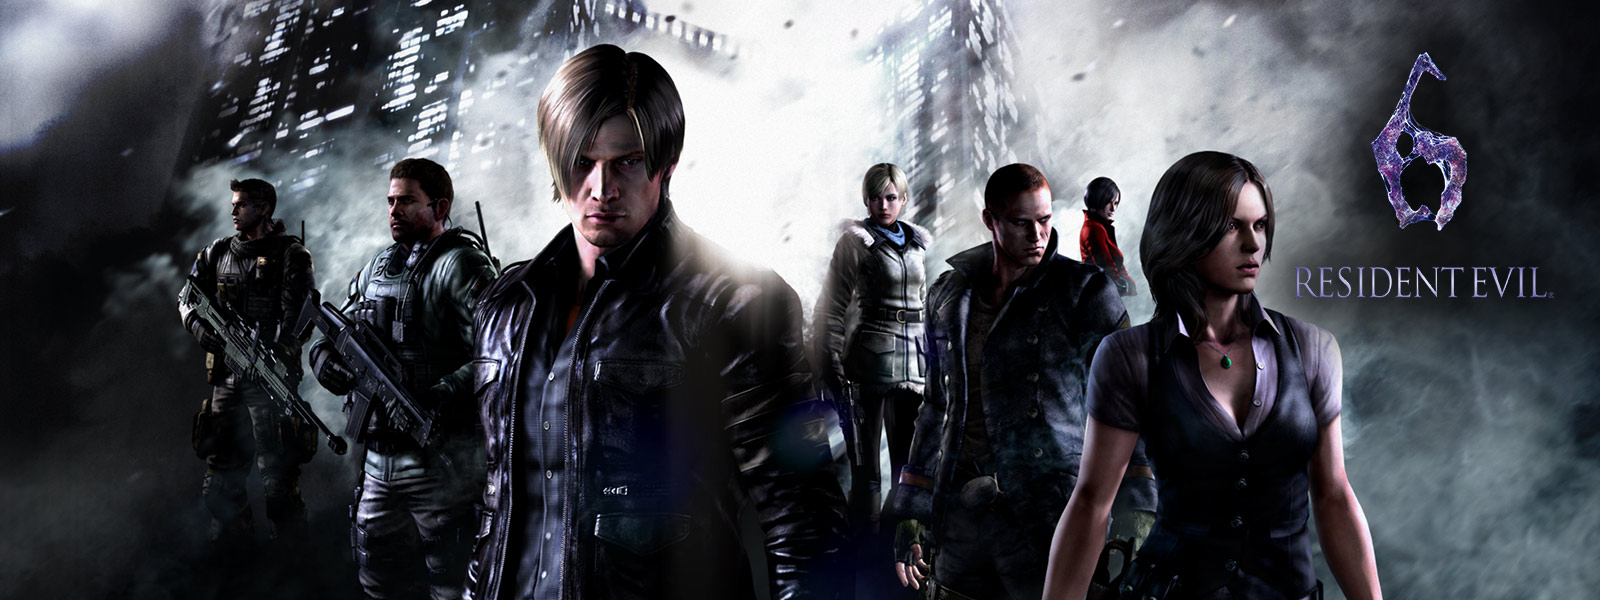 Resident Evil 6，所有 Resident Evil 角色站在刮刀刮過的不祥天空前方